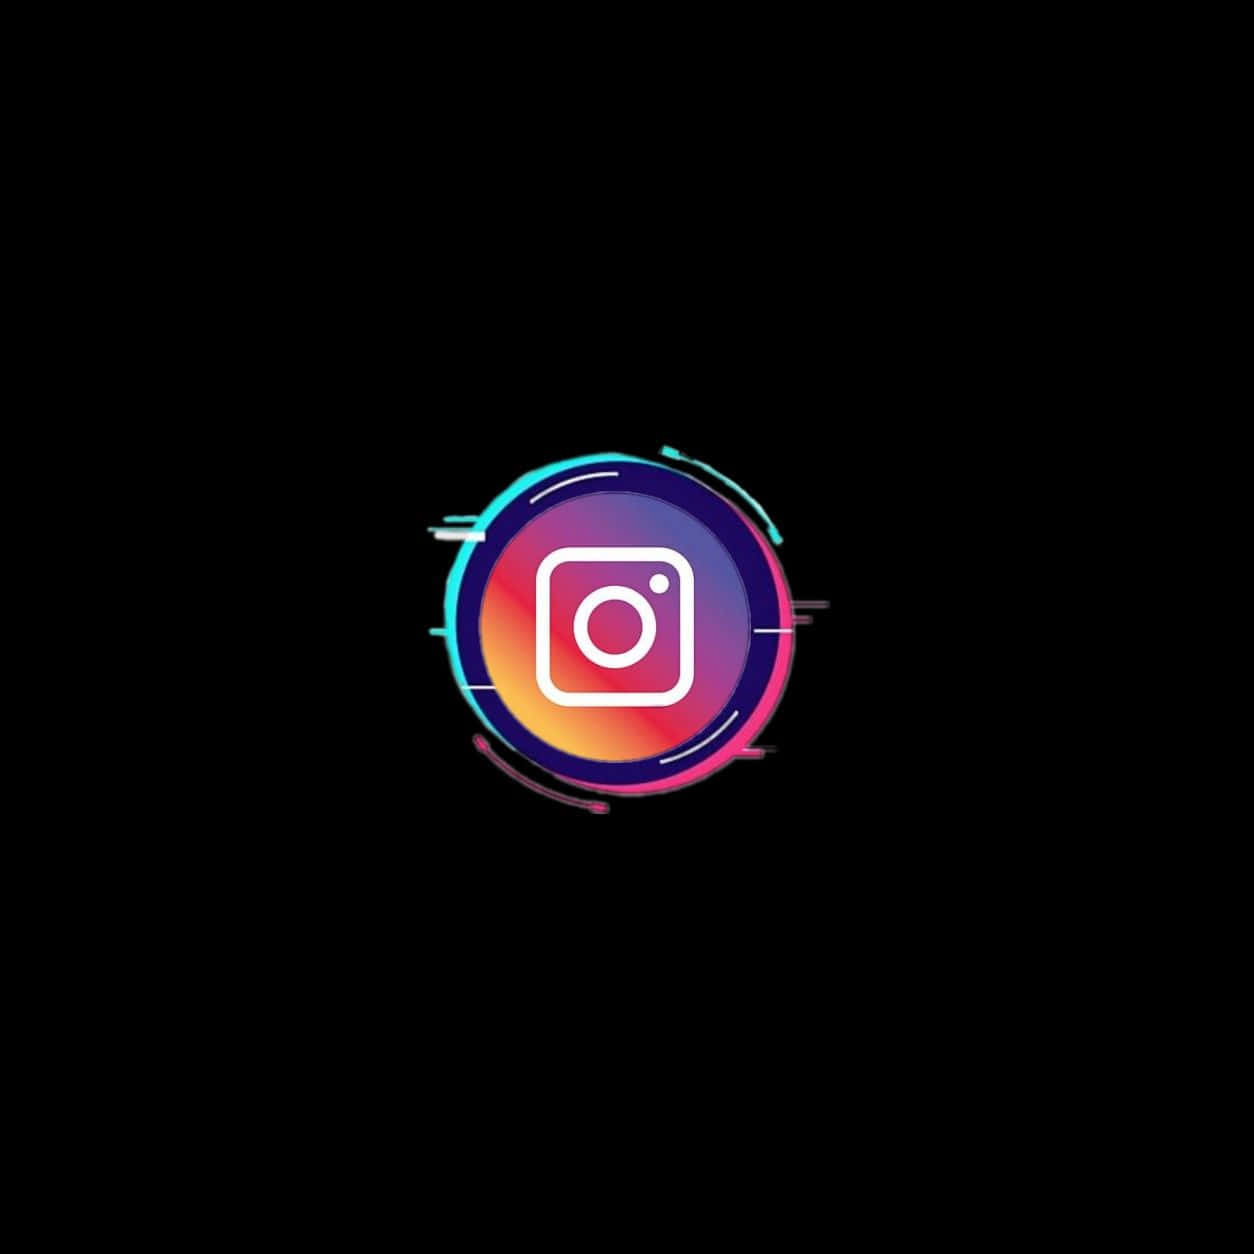 100+] Instagram Black Background s | Wallpapers.com